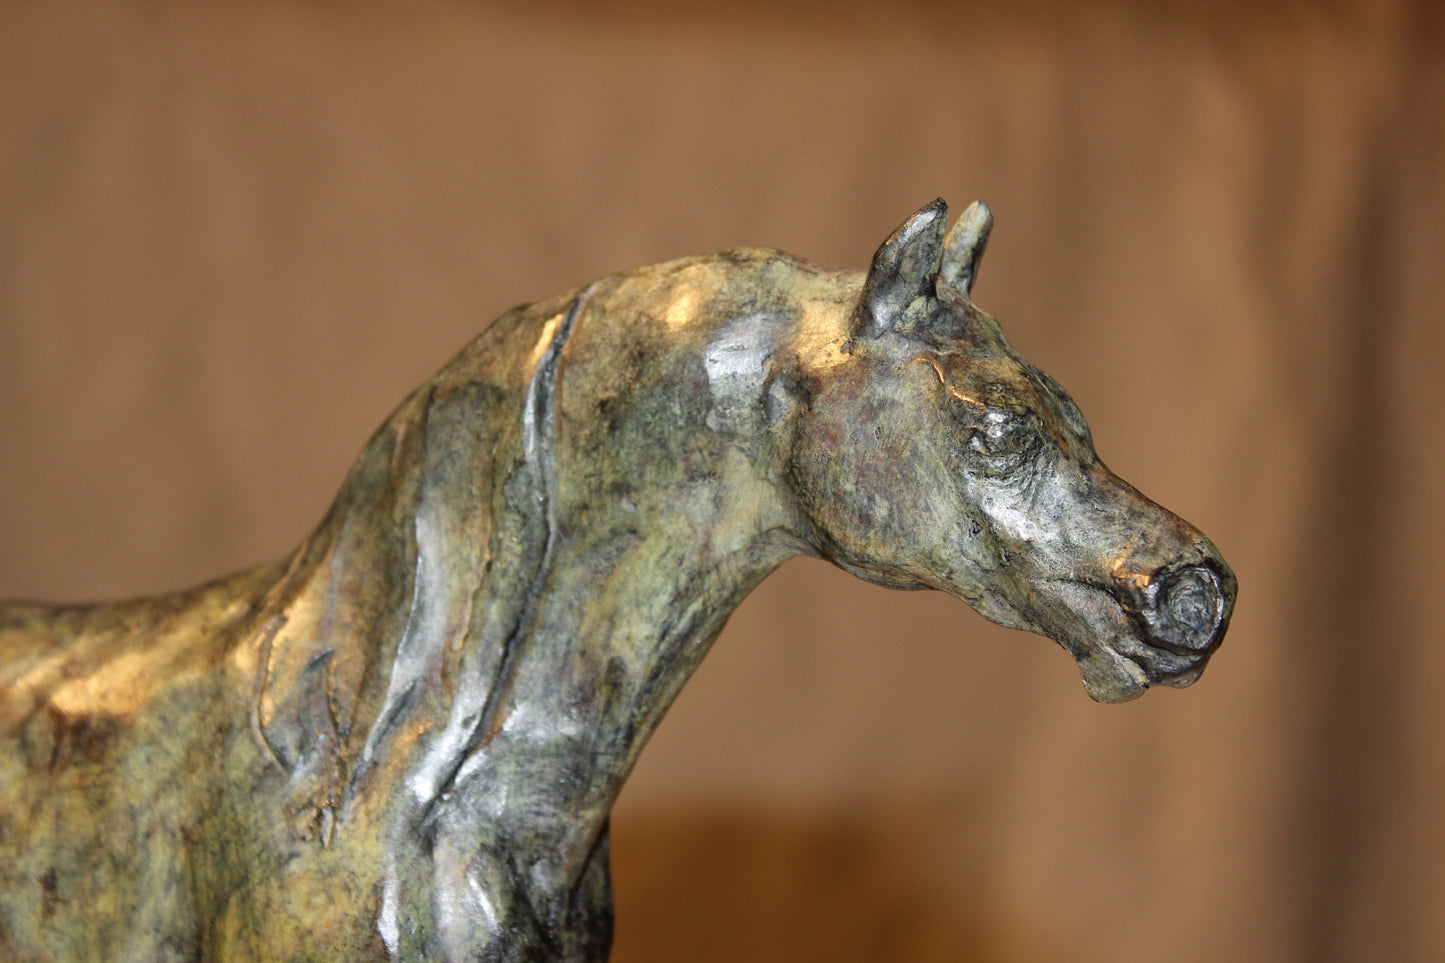 Sculpture cheval arabe, arabian horse sculpture, Audrey Flechet